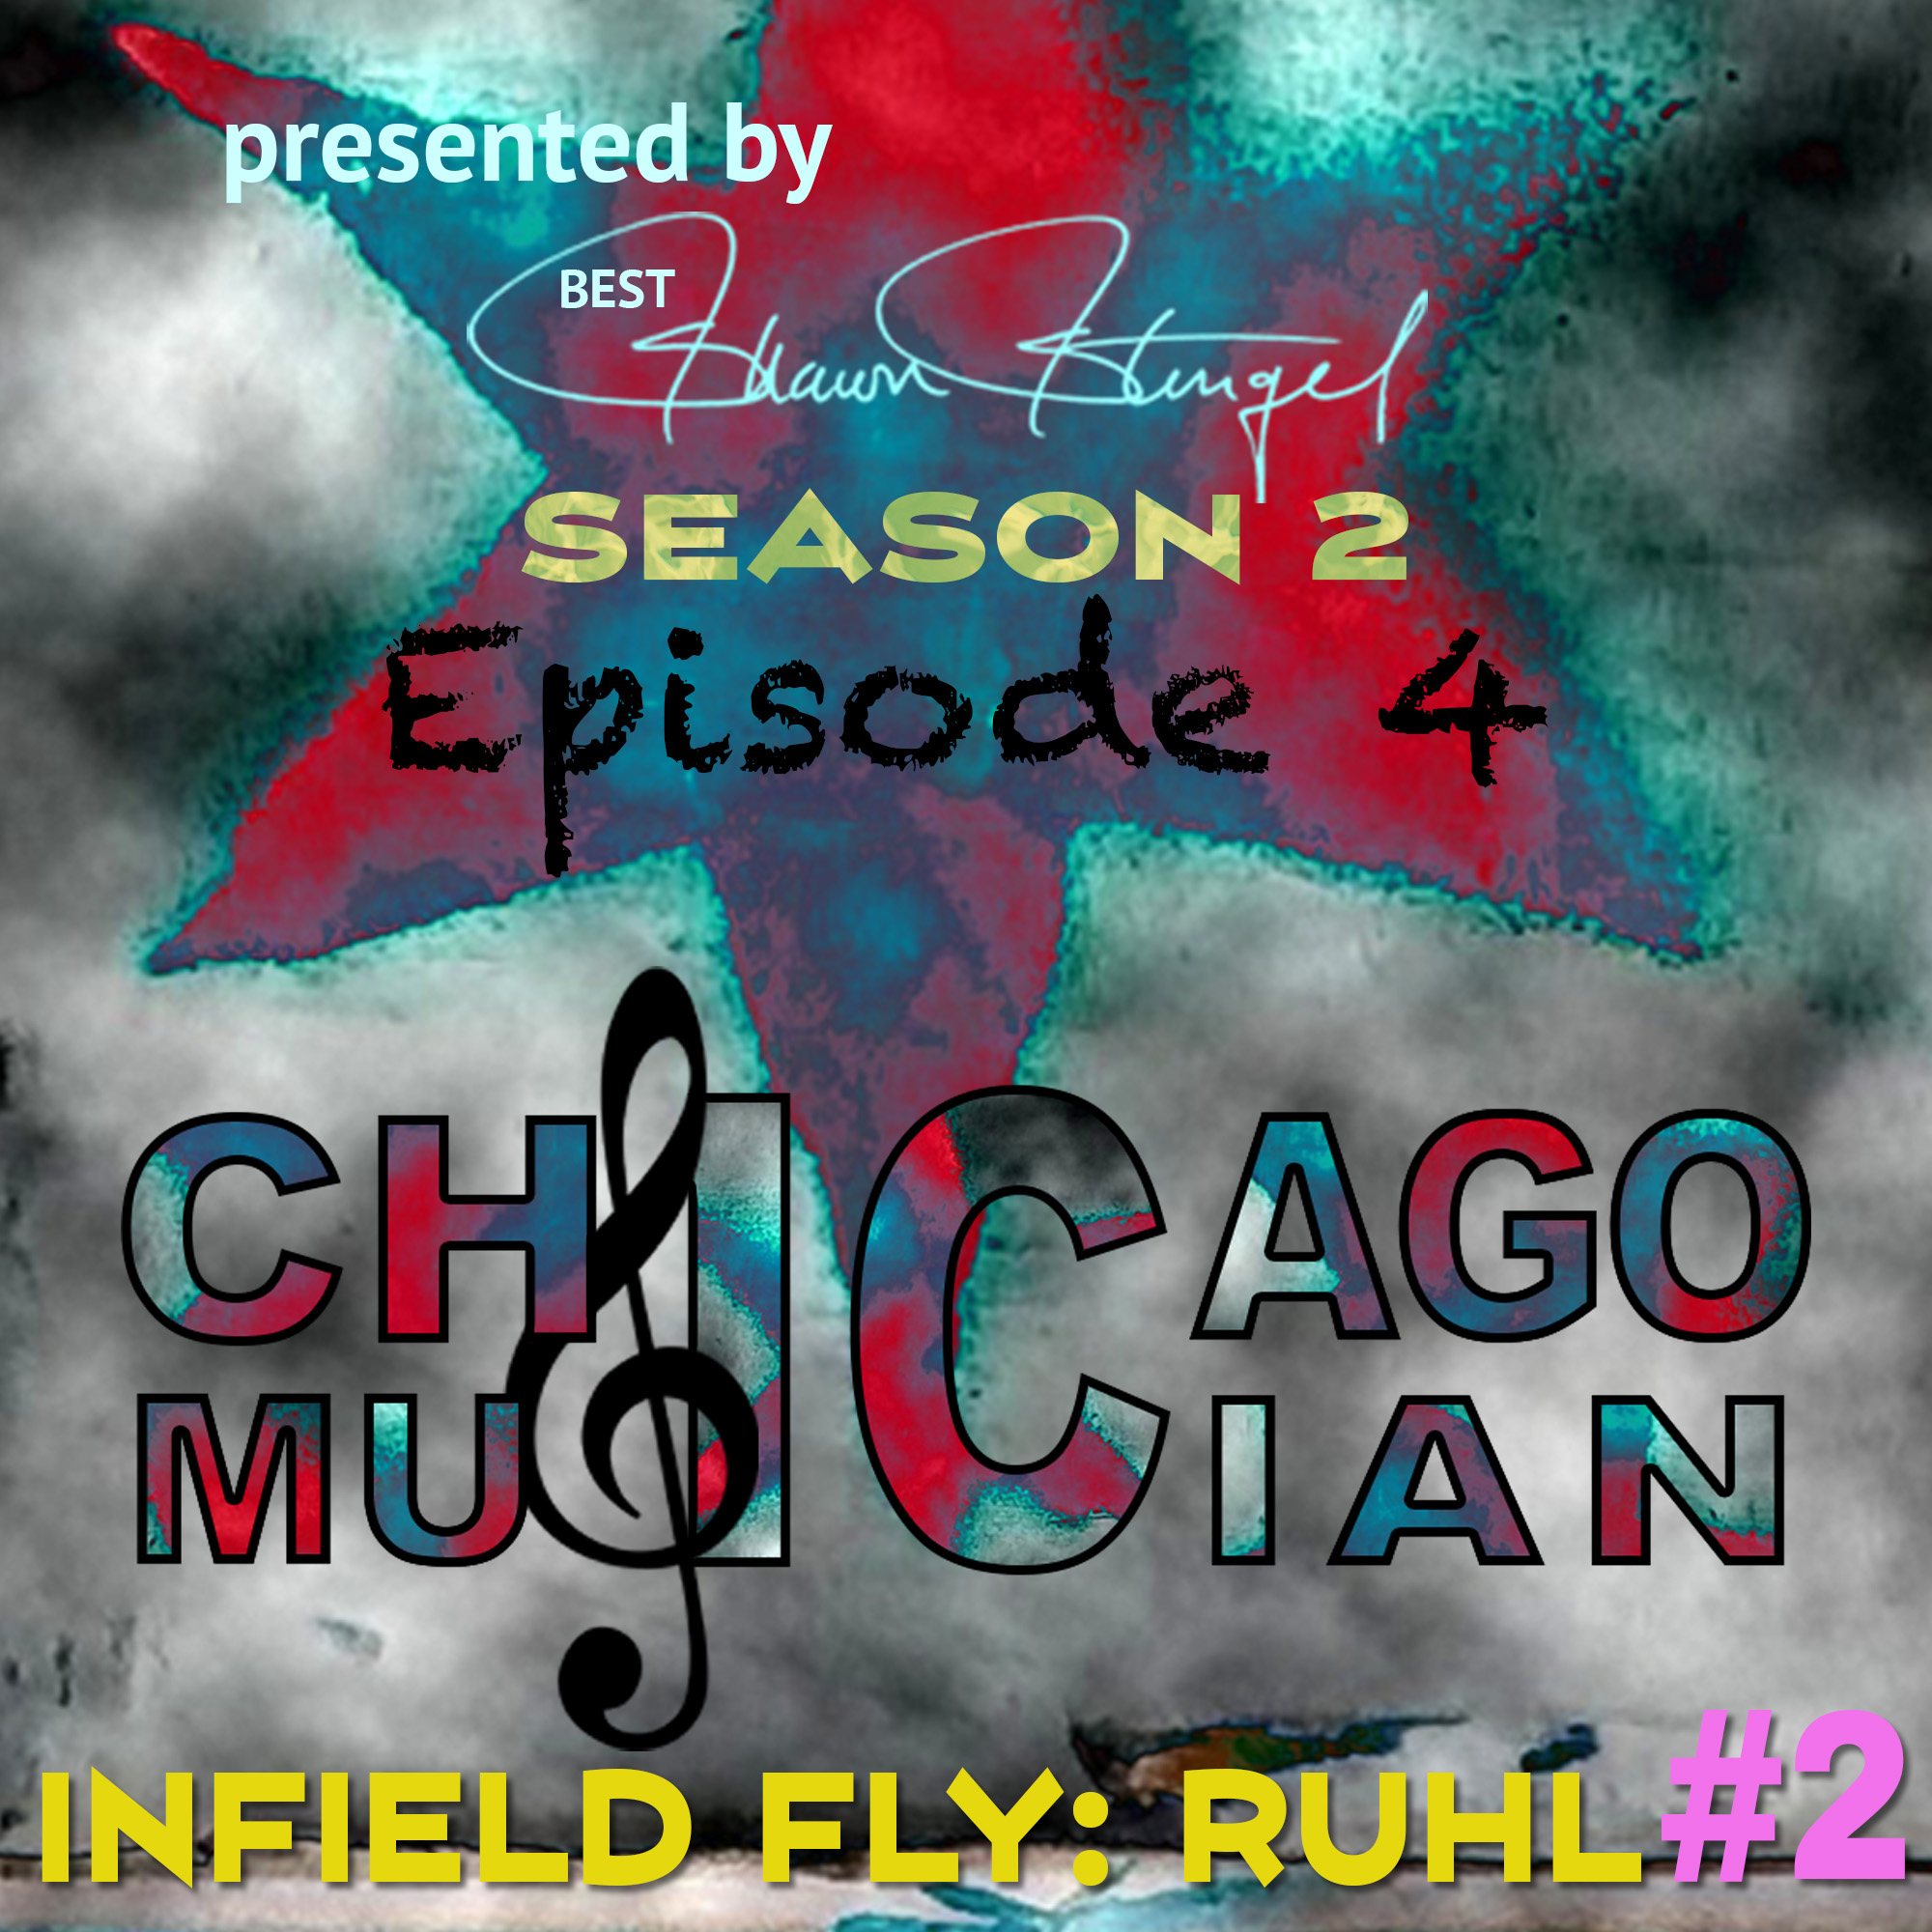 Infield Fly: Ruhl #2